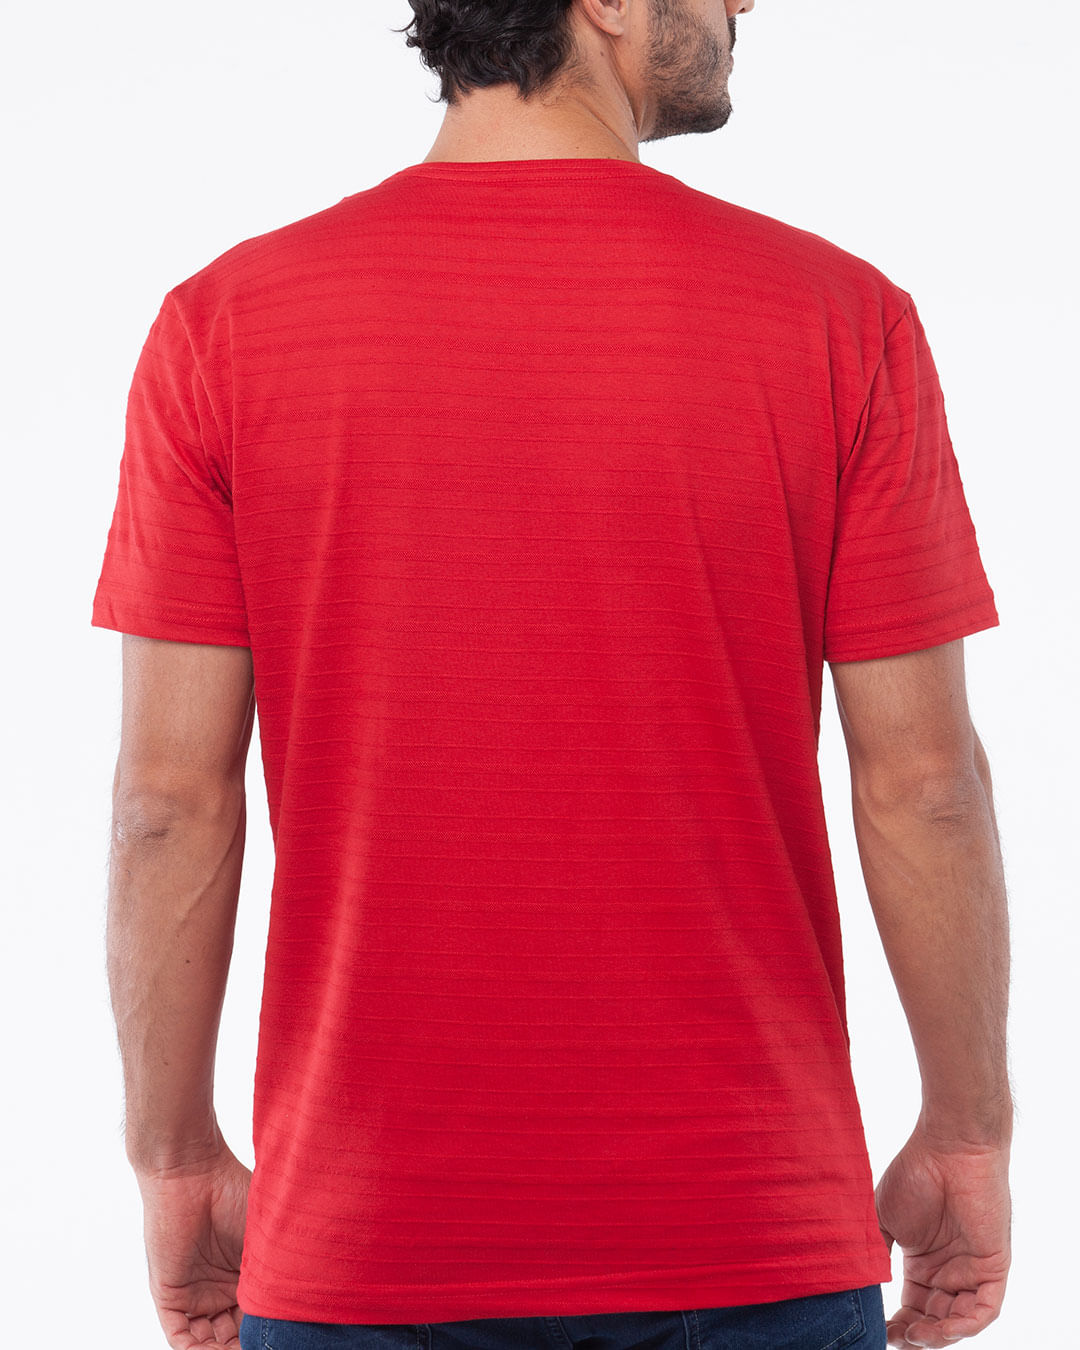 Camiseta-Masculina-Manga-Curta-Estampa-Frontal-Navy-Vermelha